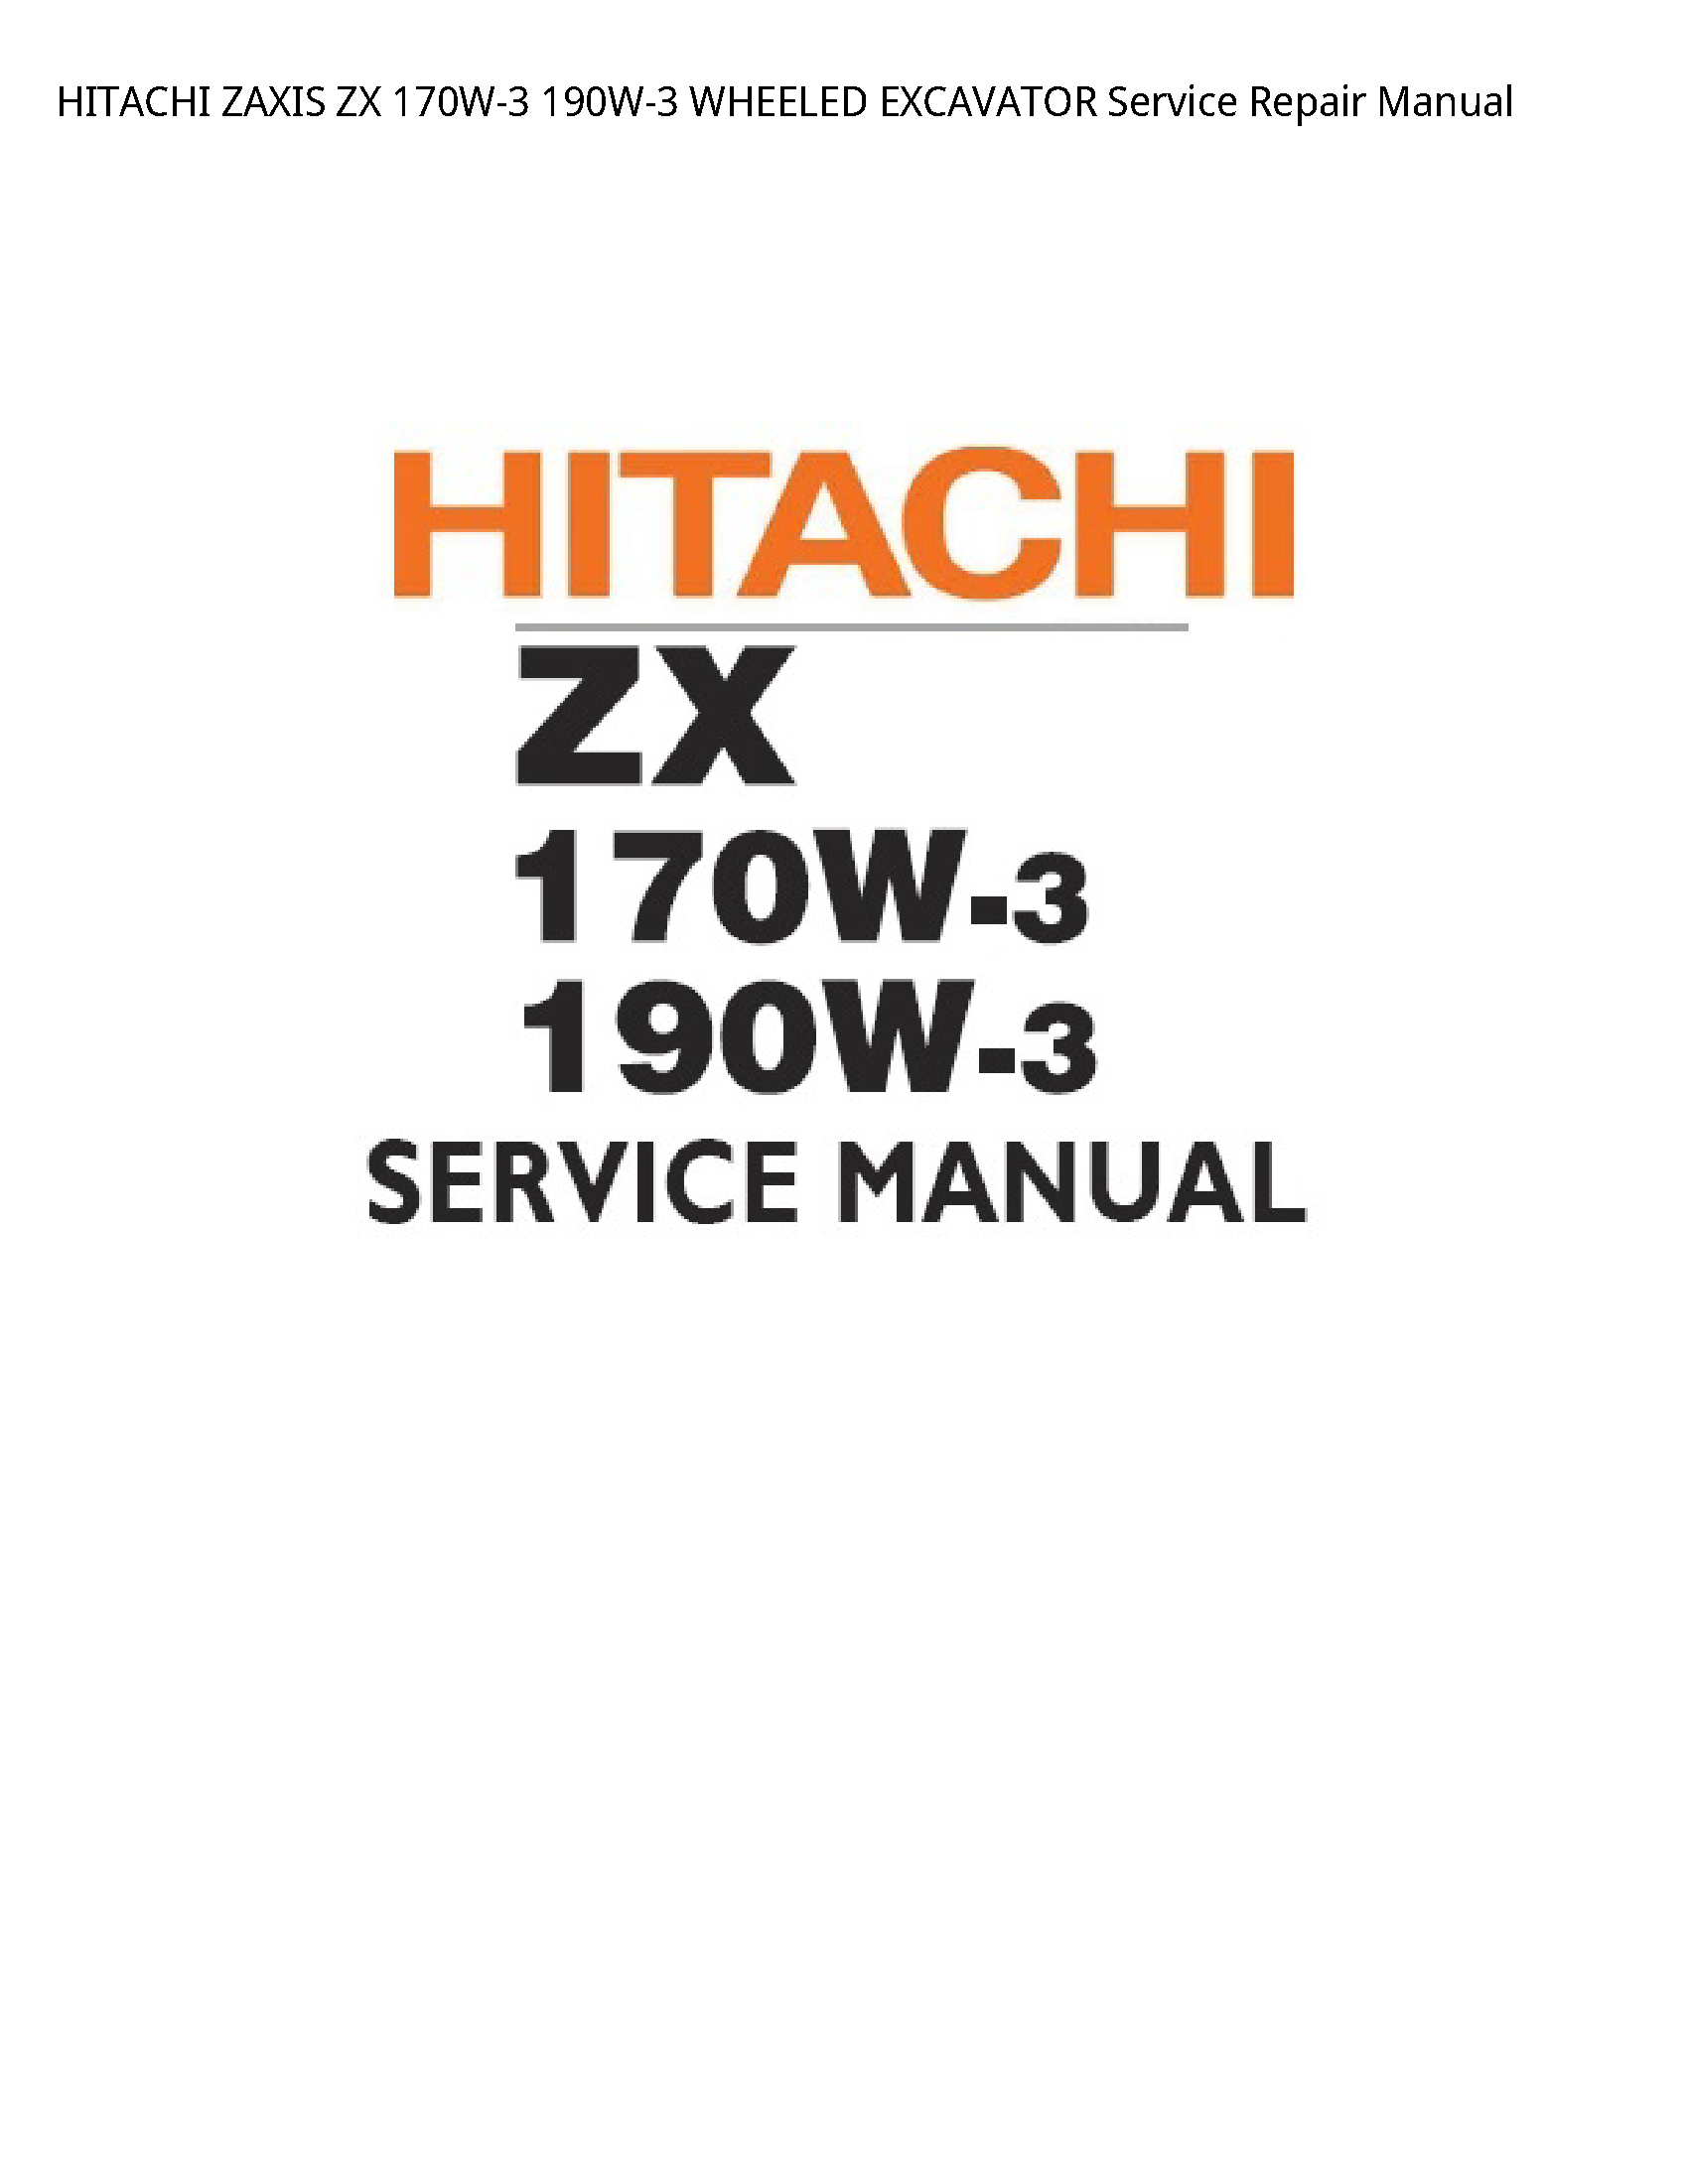 Hitachi 170W-3 ZAXIS ZX WHEELED EXCAVATOR manual